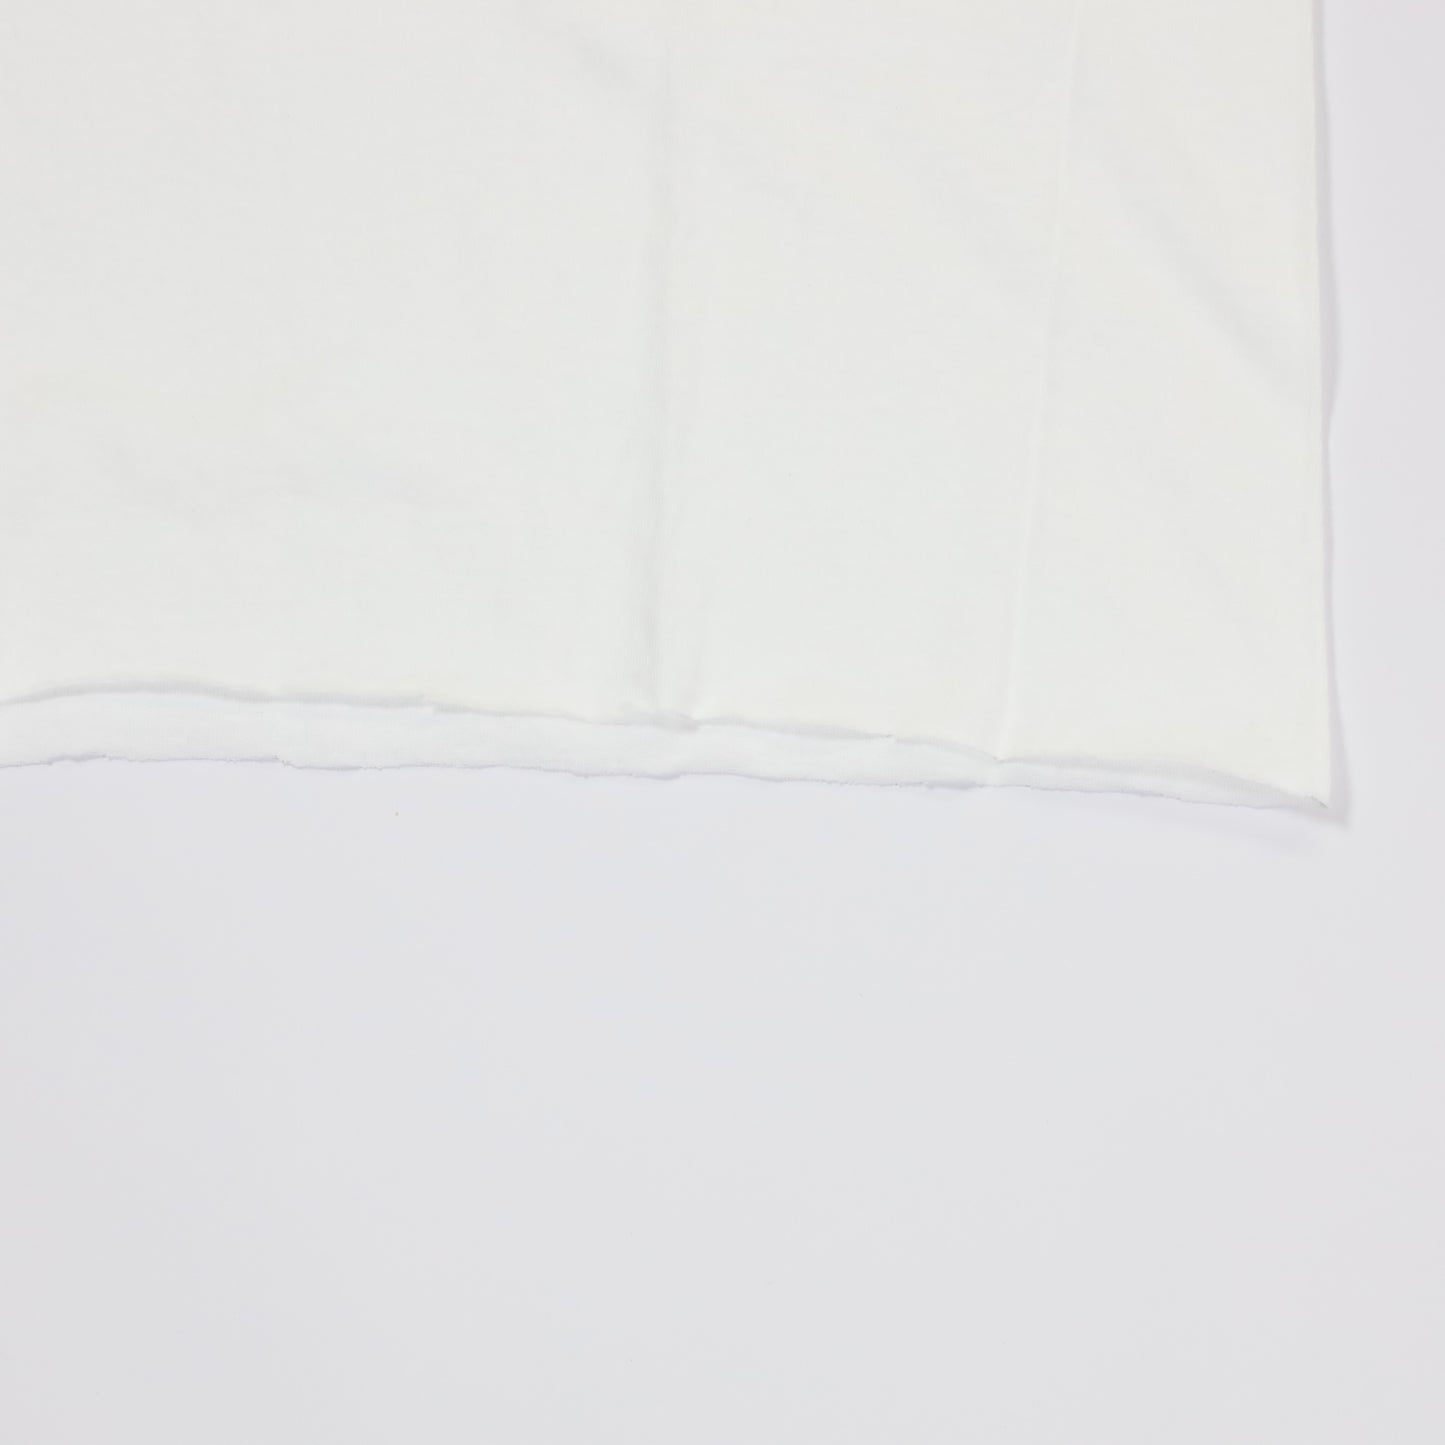 FREEDOM&NATIVE T-Shirts WHITE × PURPLE